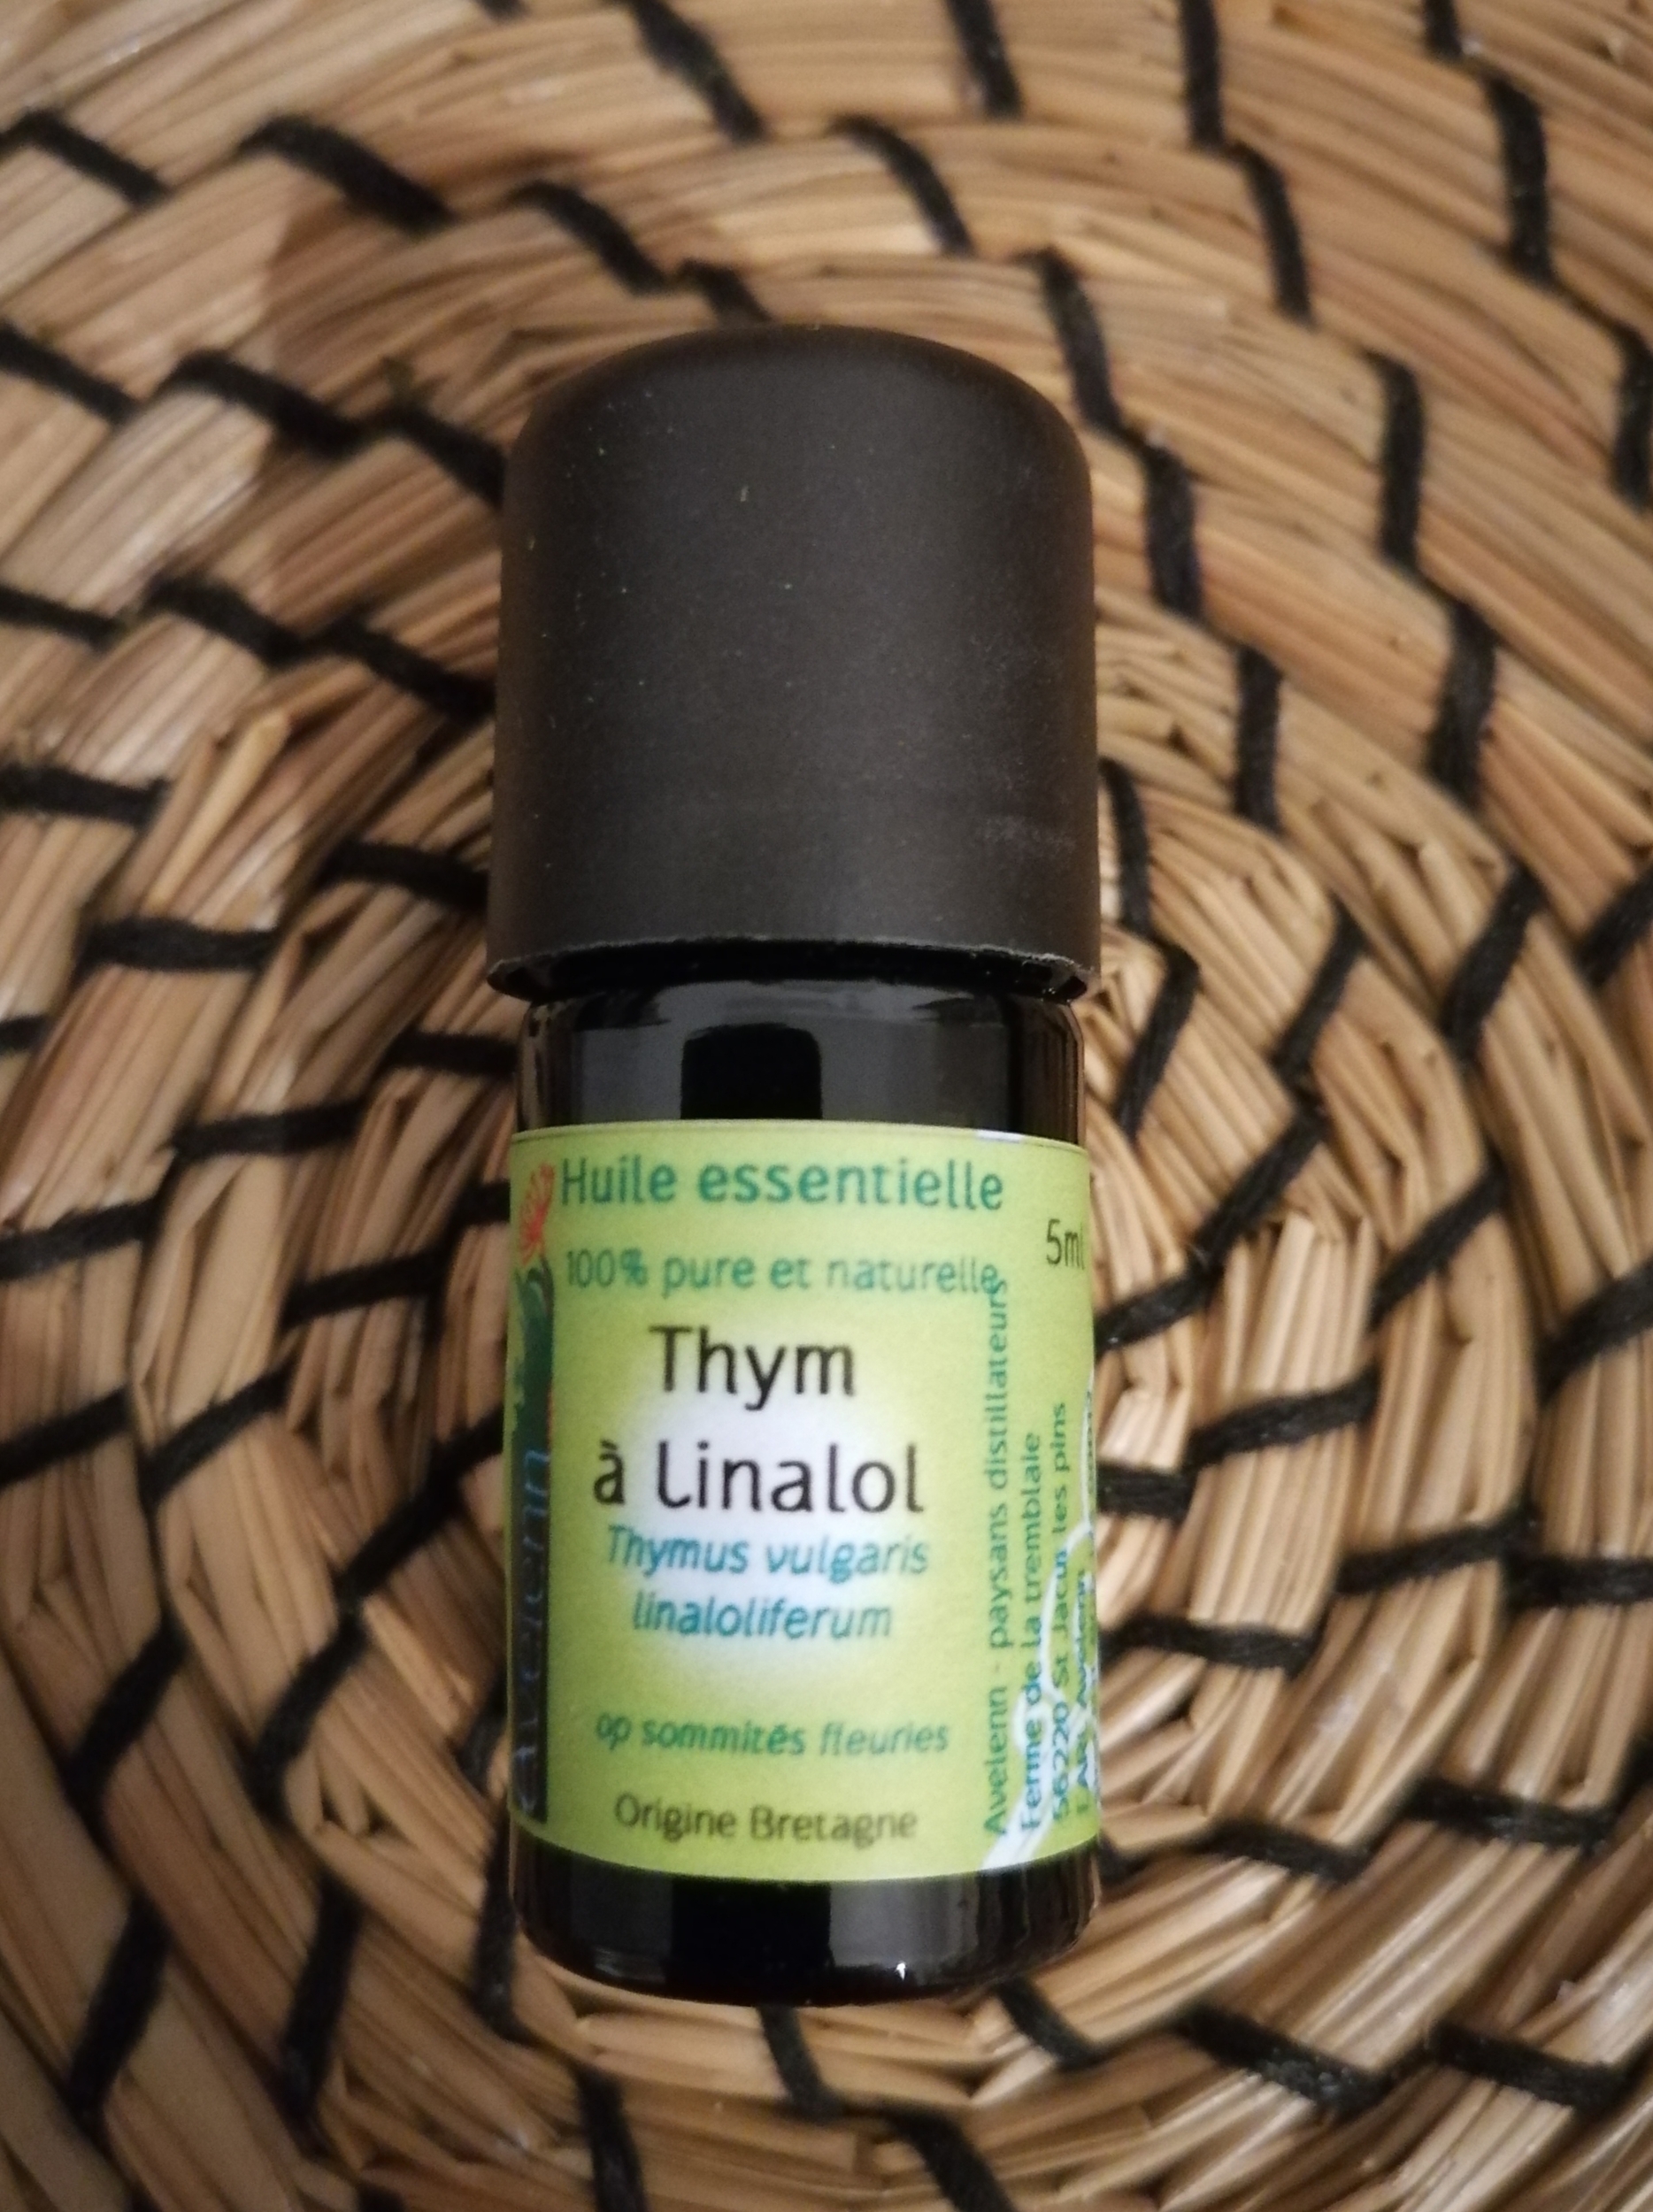 he-thym-a-linalol-huile-essentielle-avelenn-bio-herboristerie